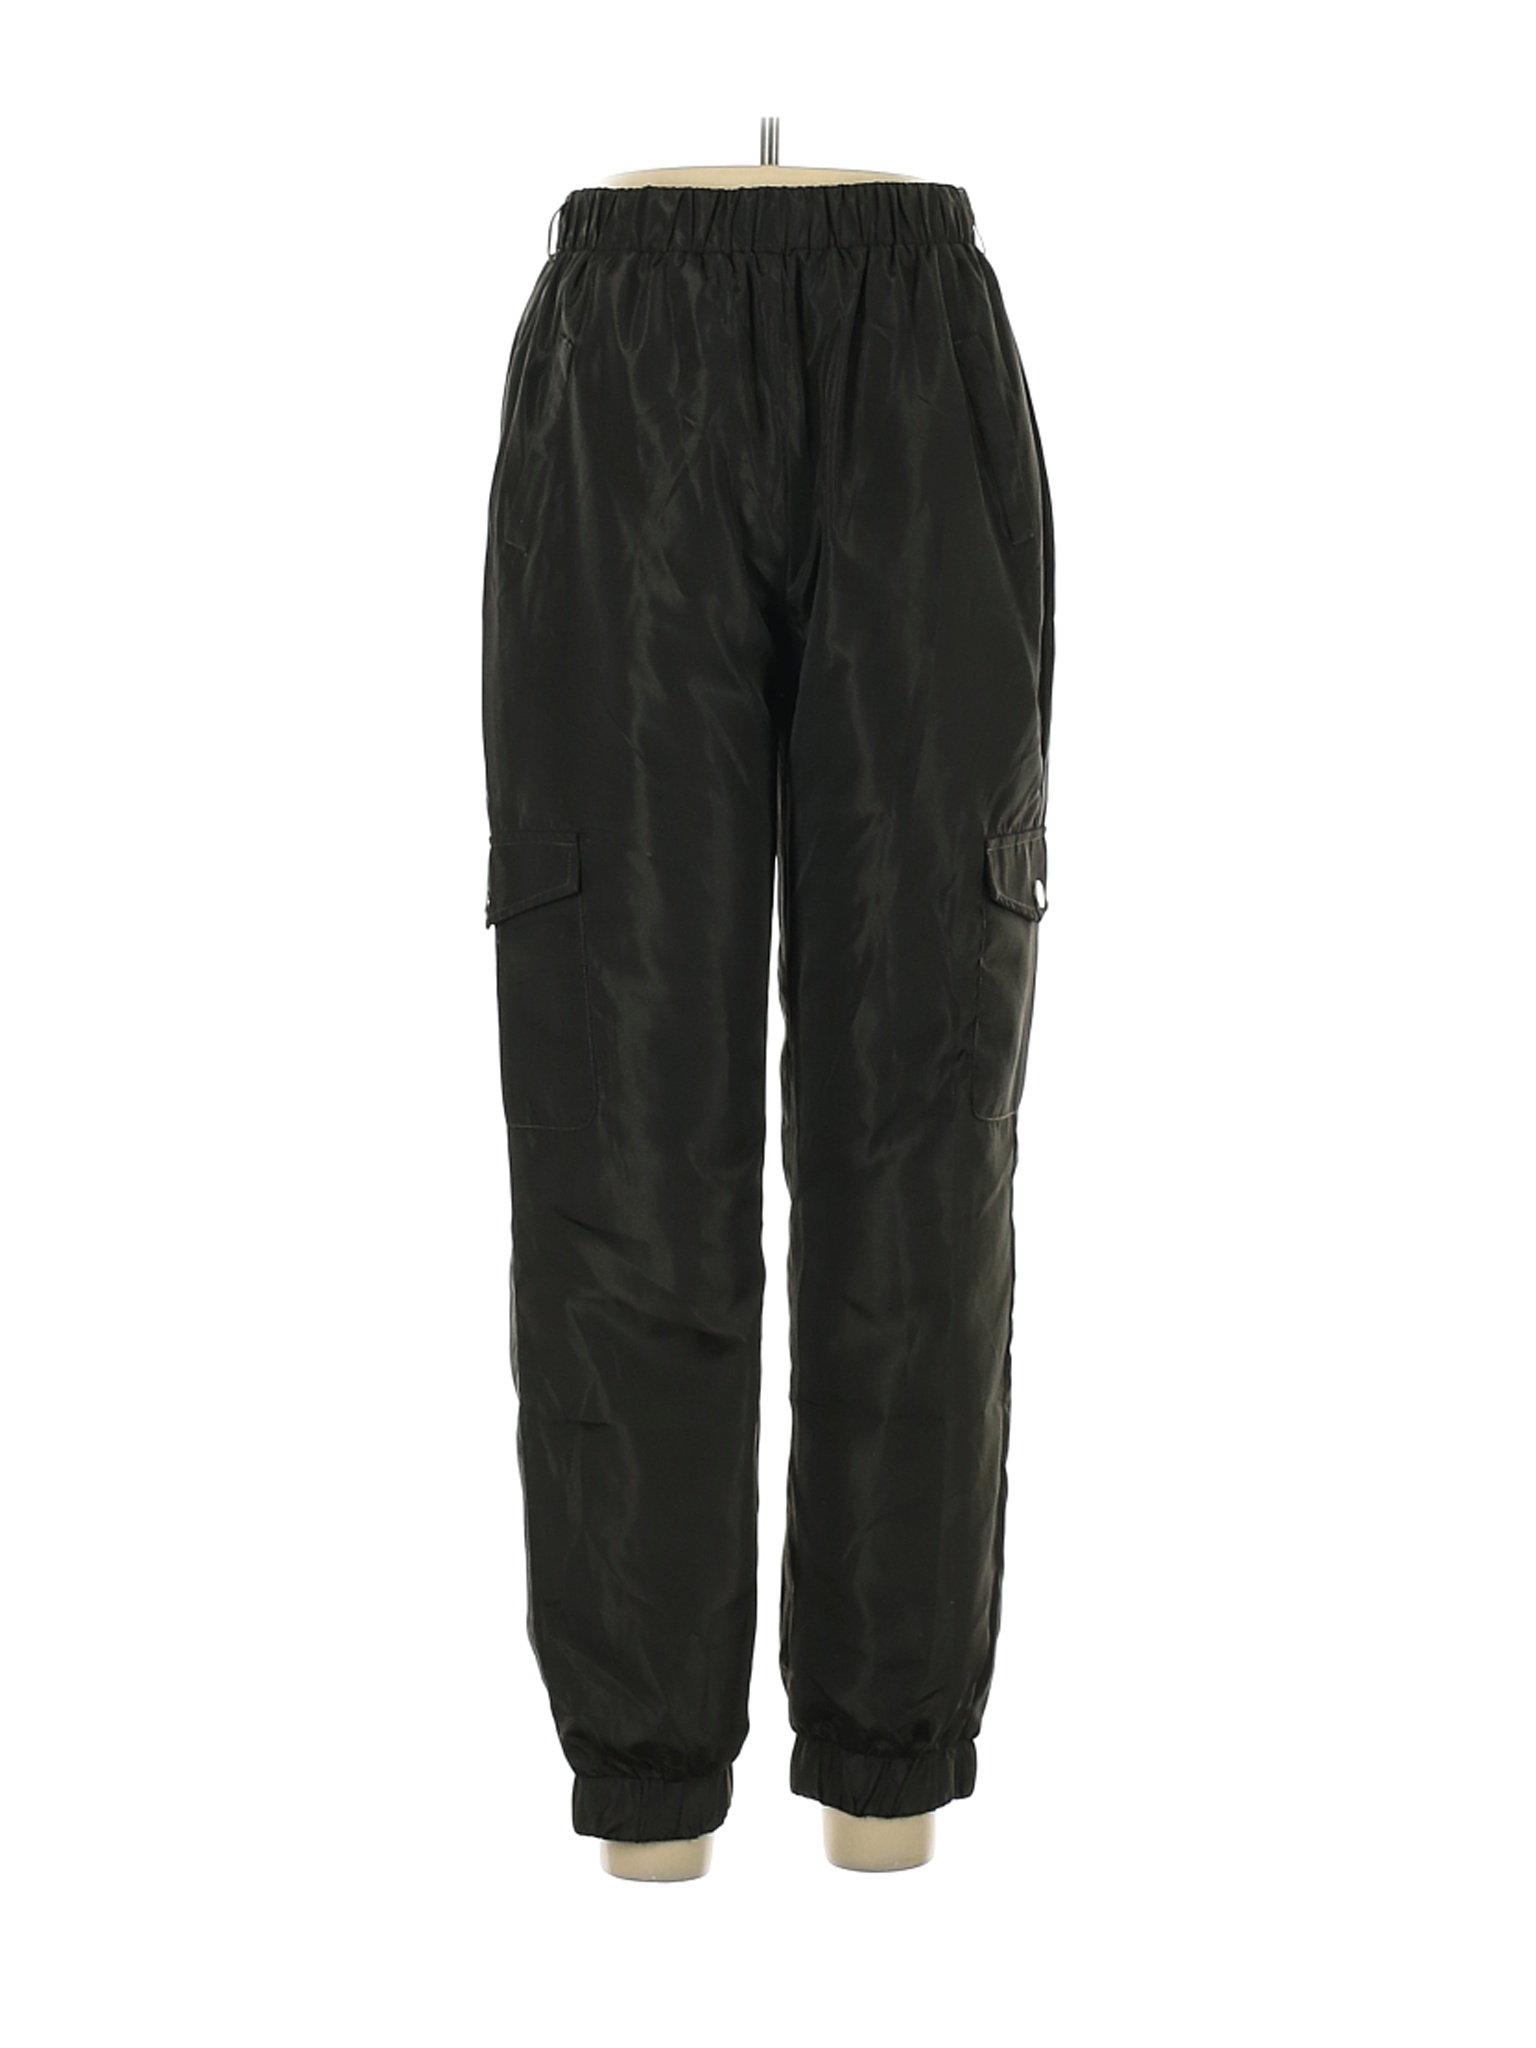 Shein Women Black Cargo Pants M | eBay